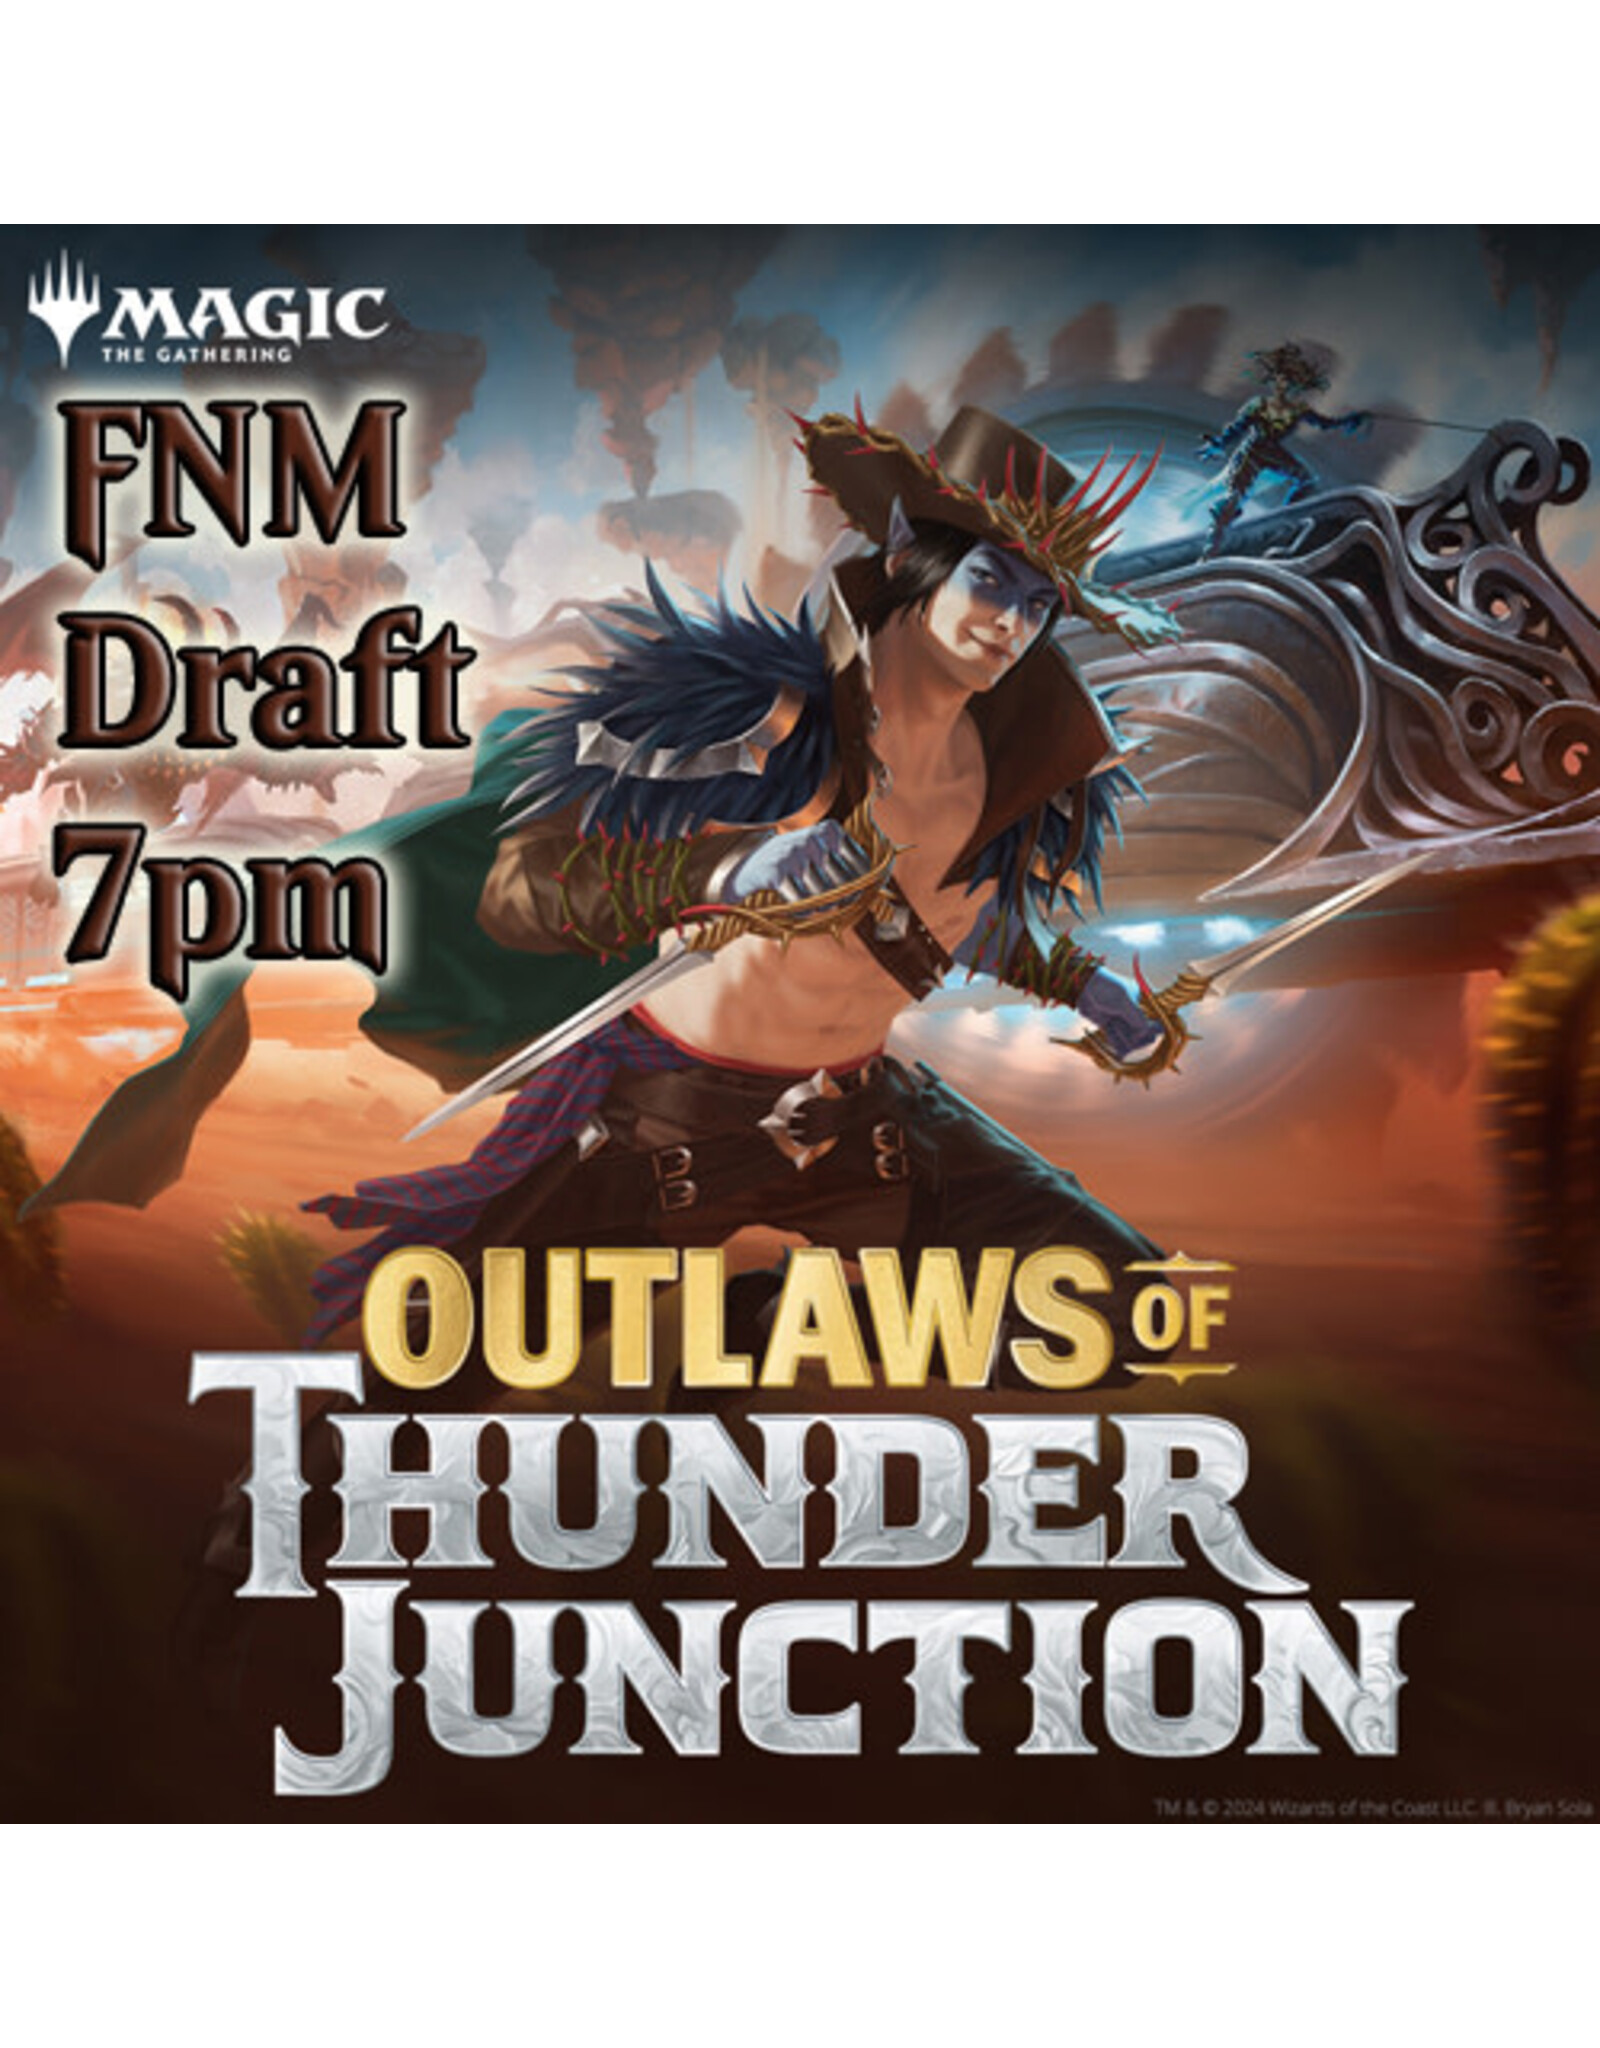 FNM Draft Outlaws of Thunder Junction